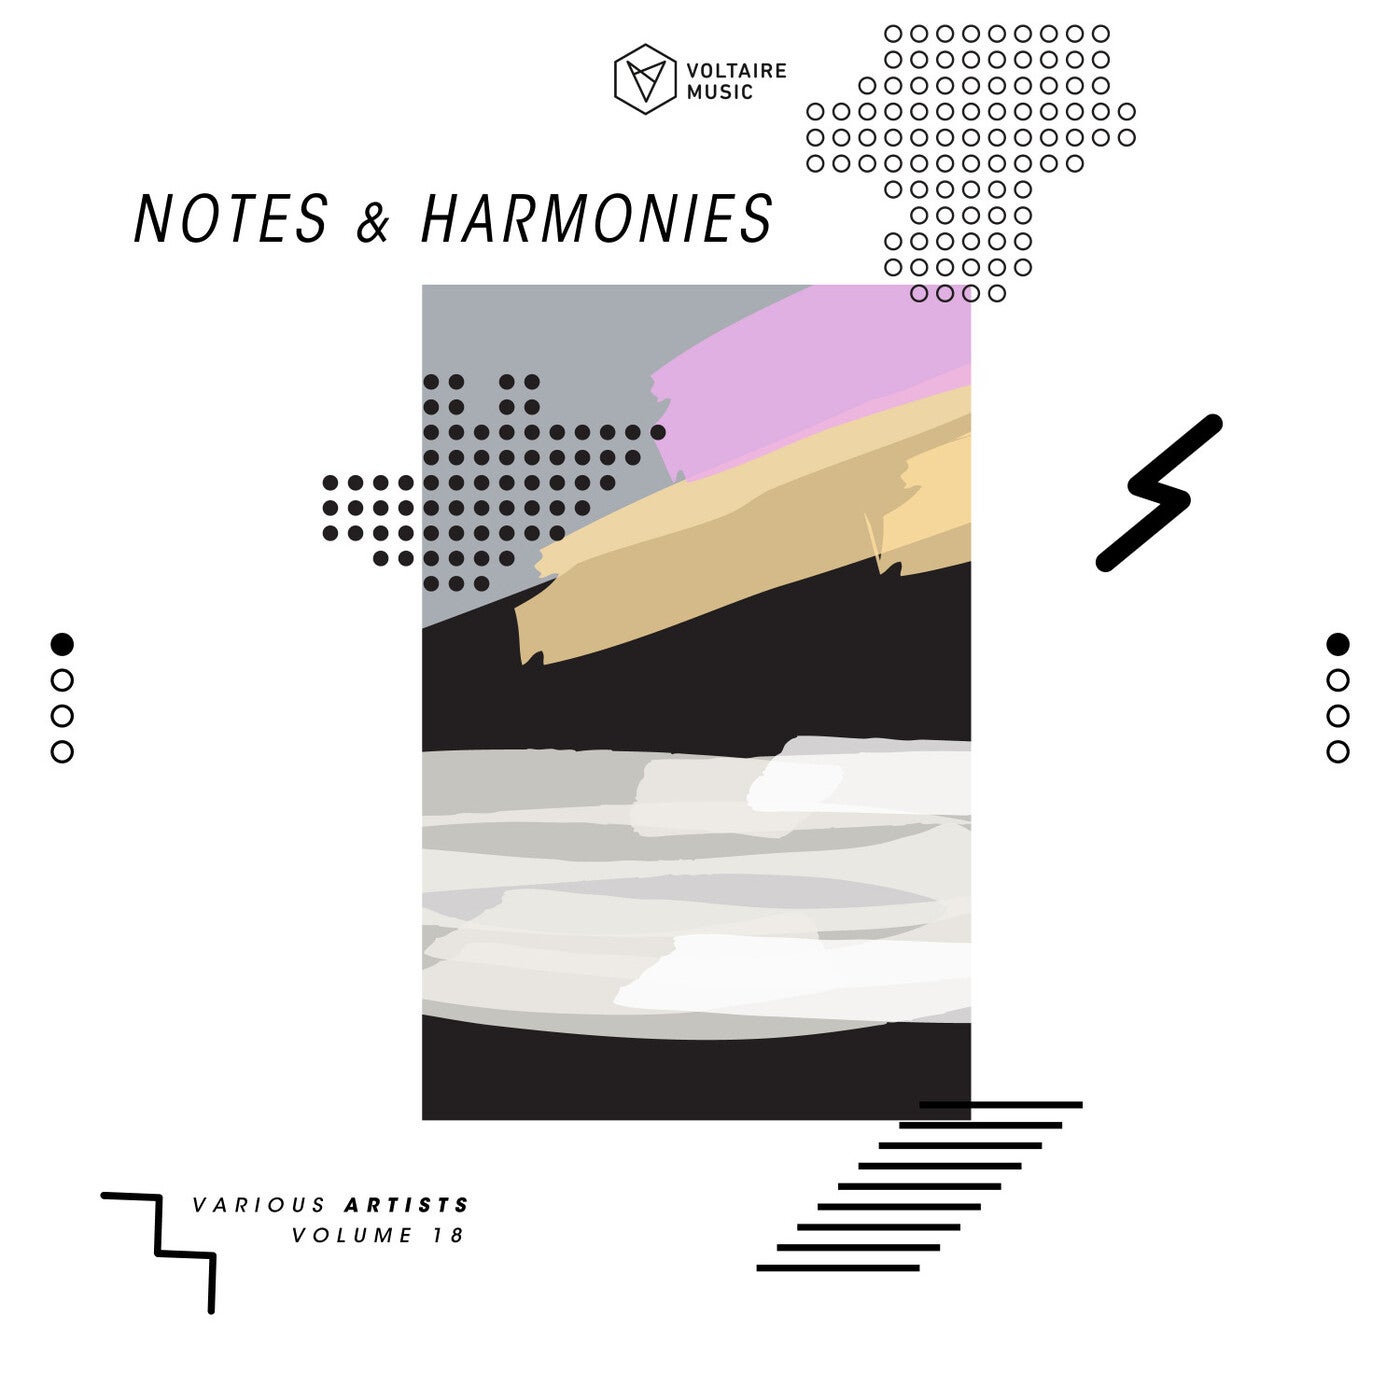 Notes & Harmonies Vol. 18